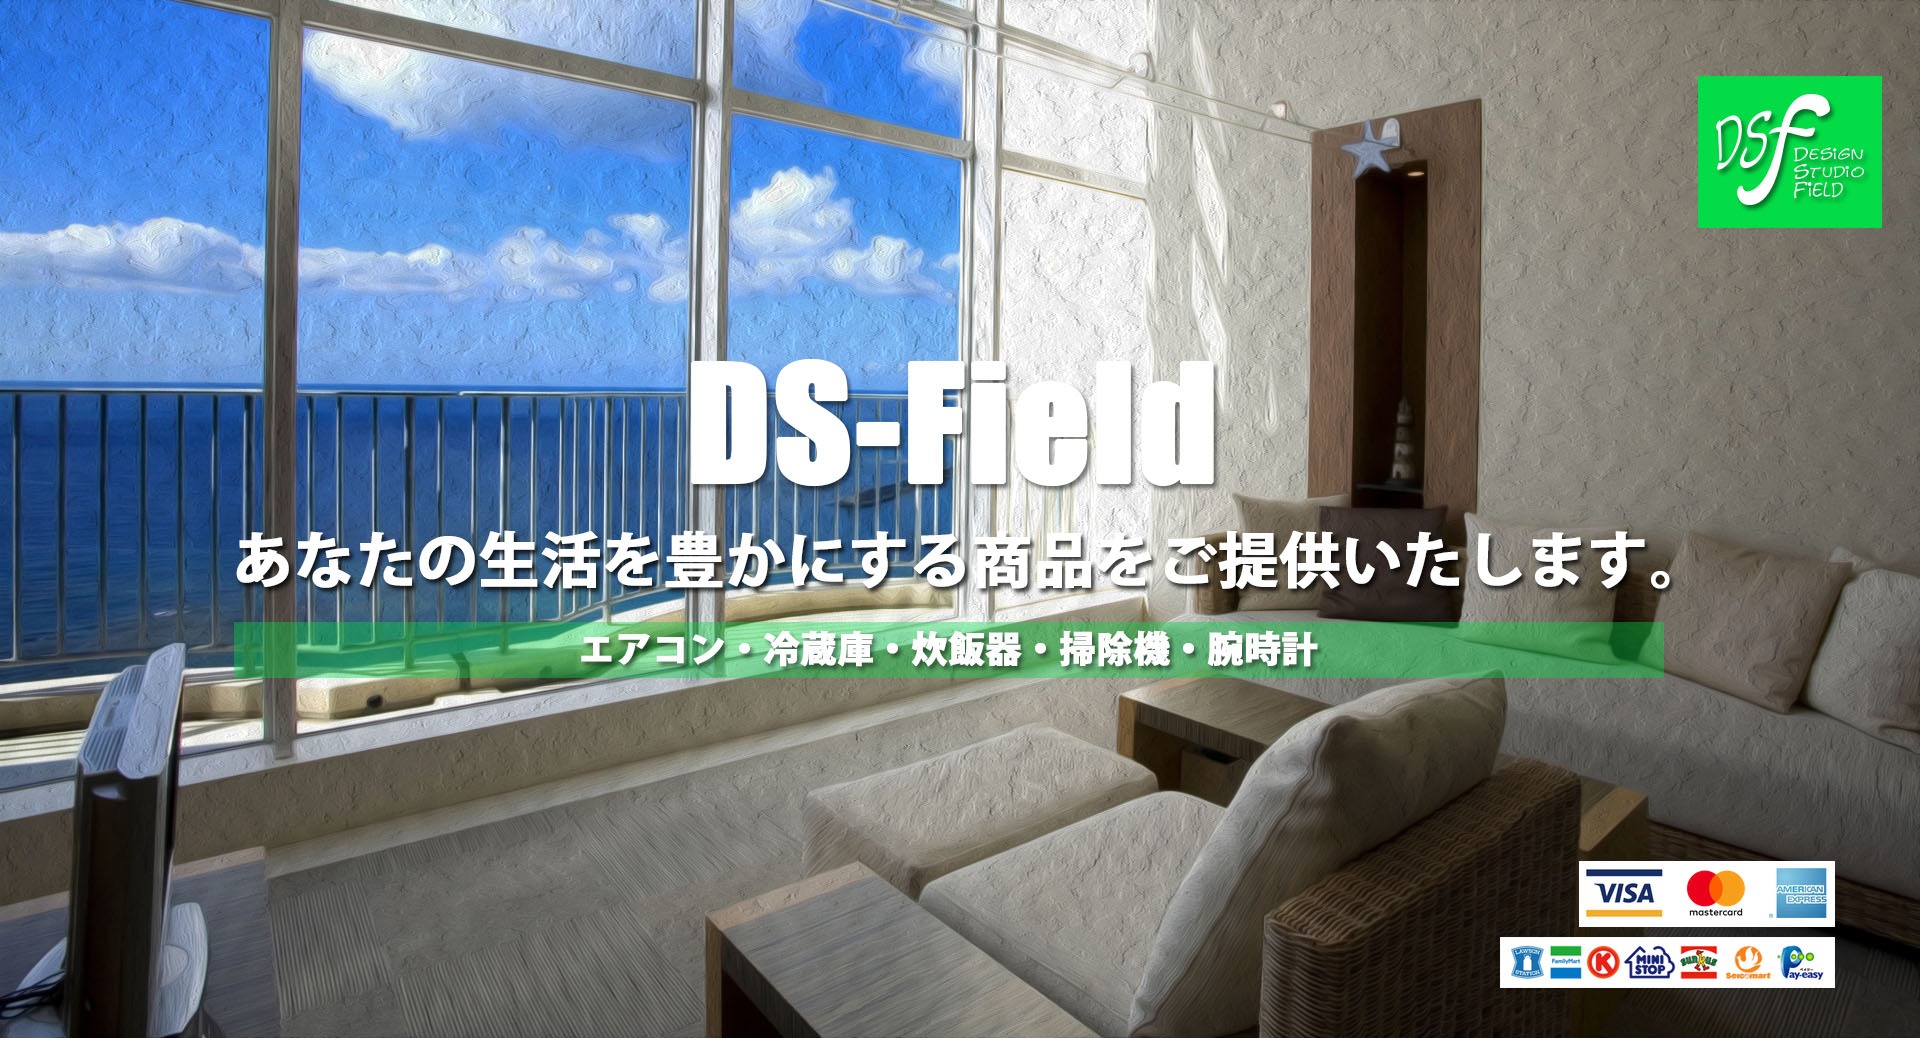 DS-Field SHOP